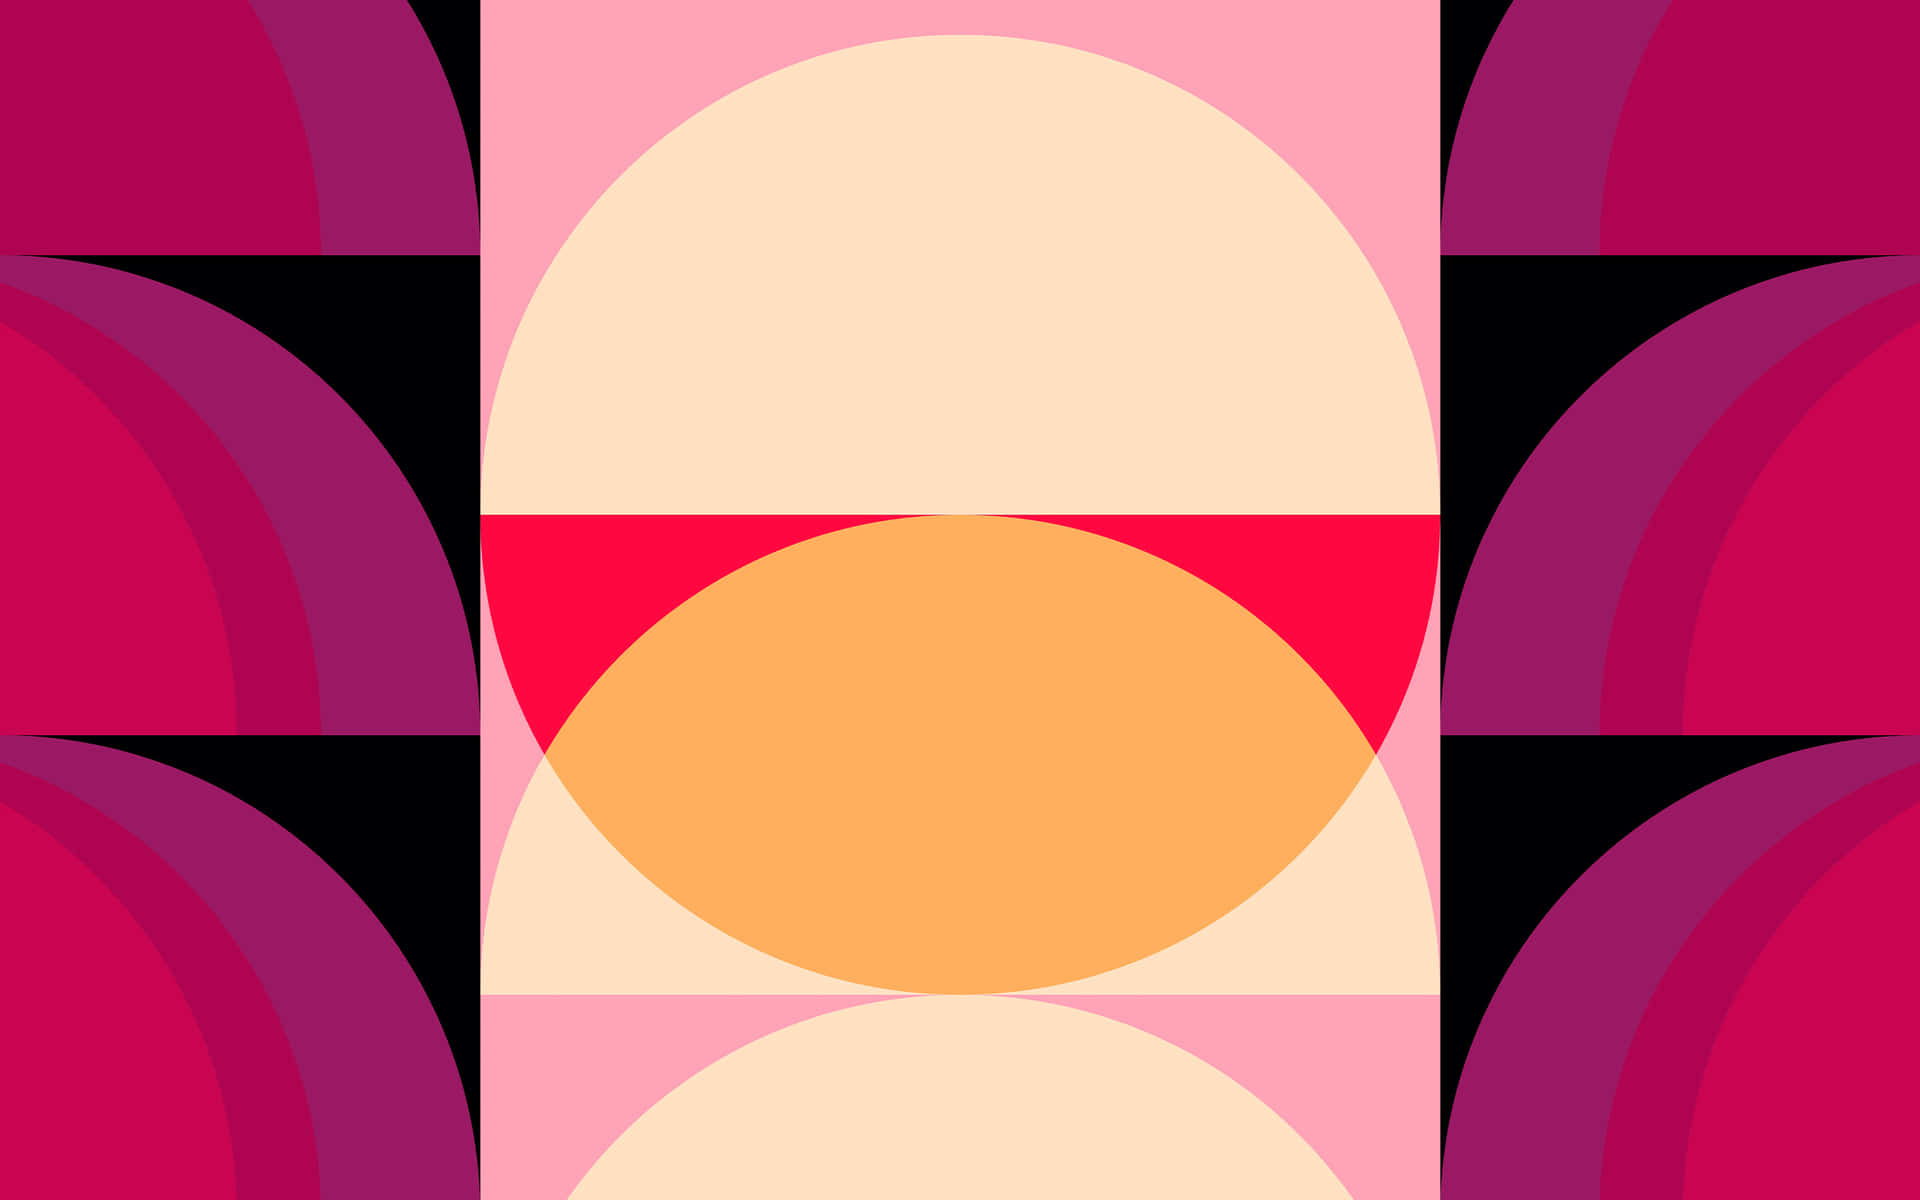 Abstract Geometric Symmetry Art Wallpaper